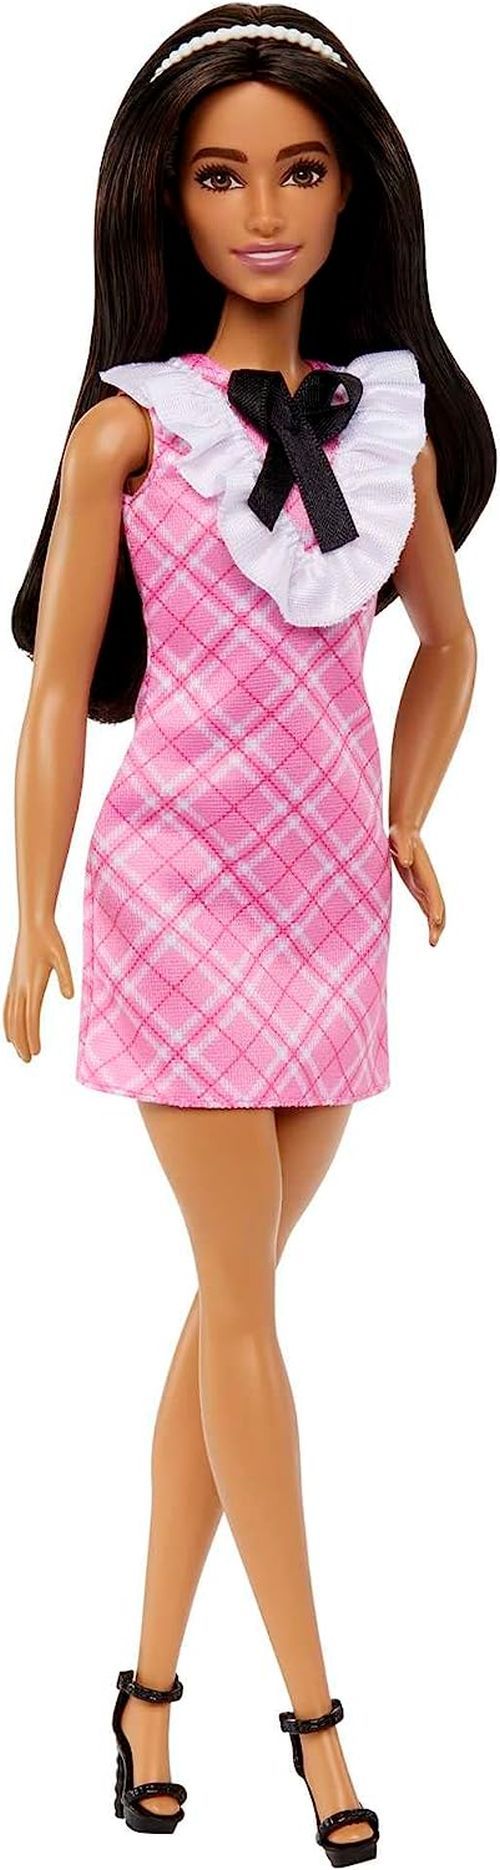 MATTEL Barbie In A Pink Plaid Dress - 